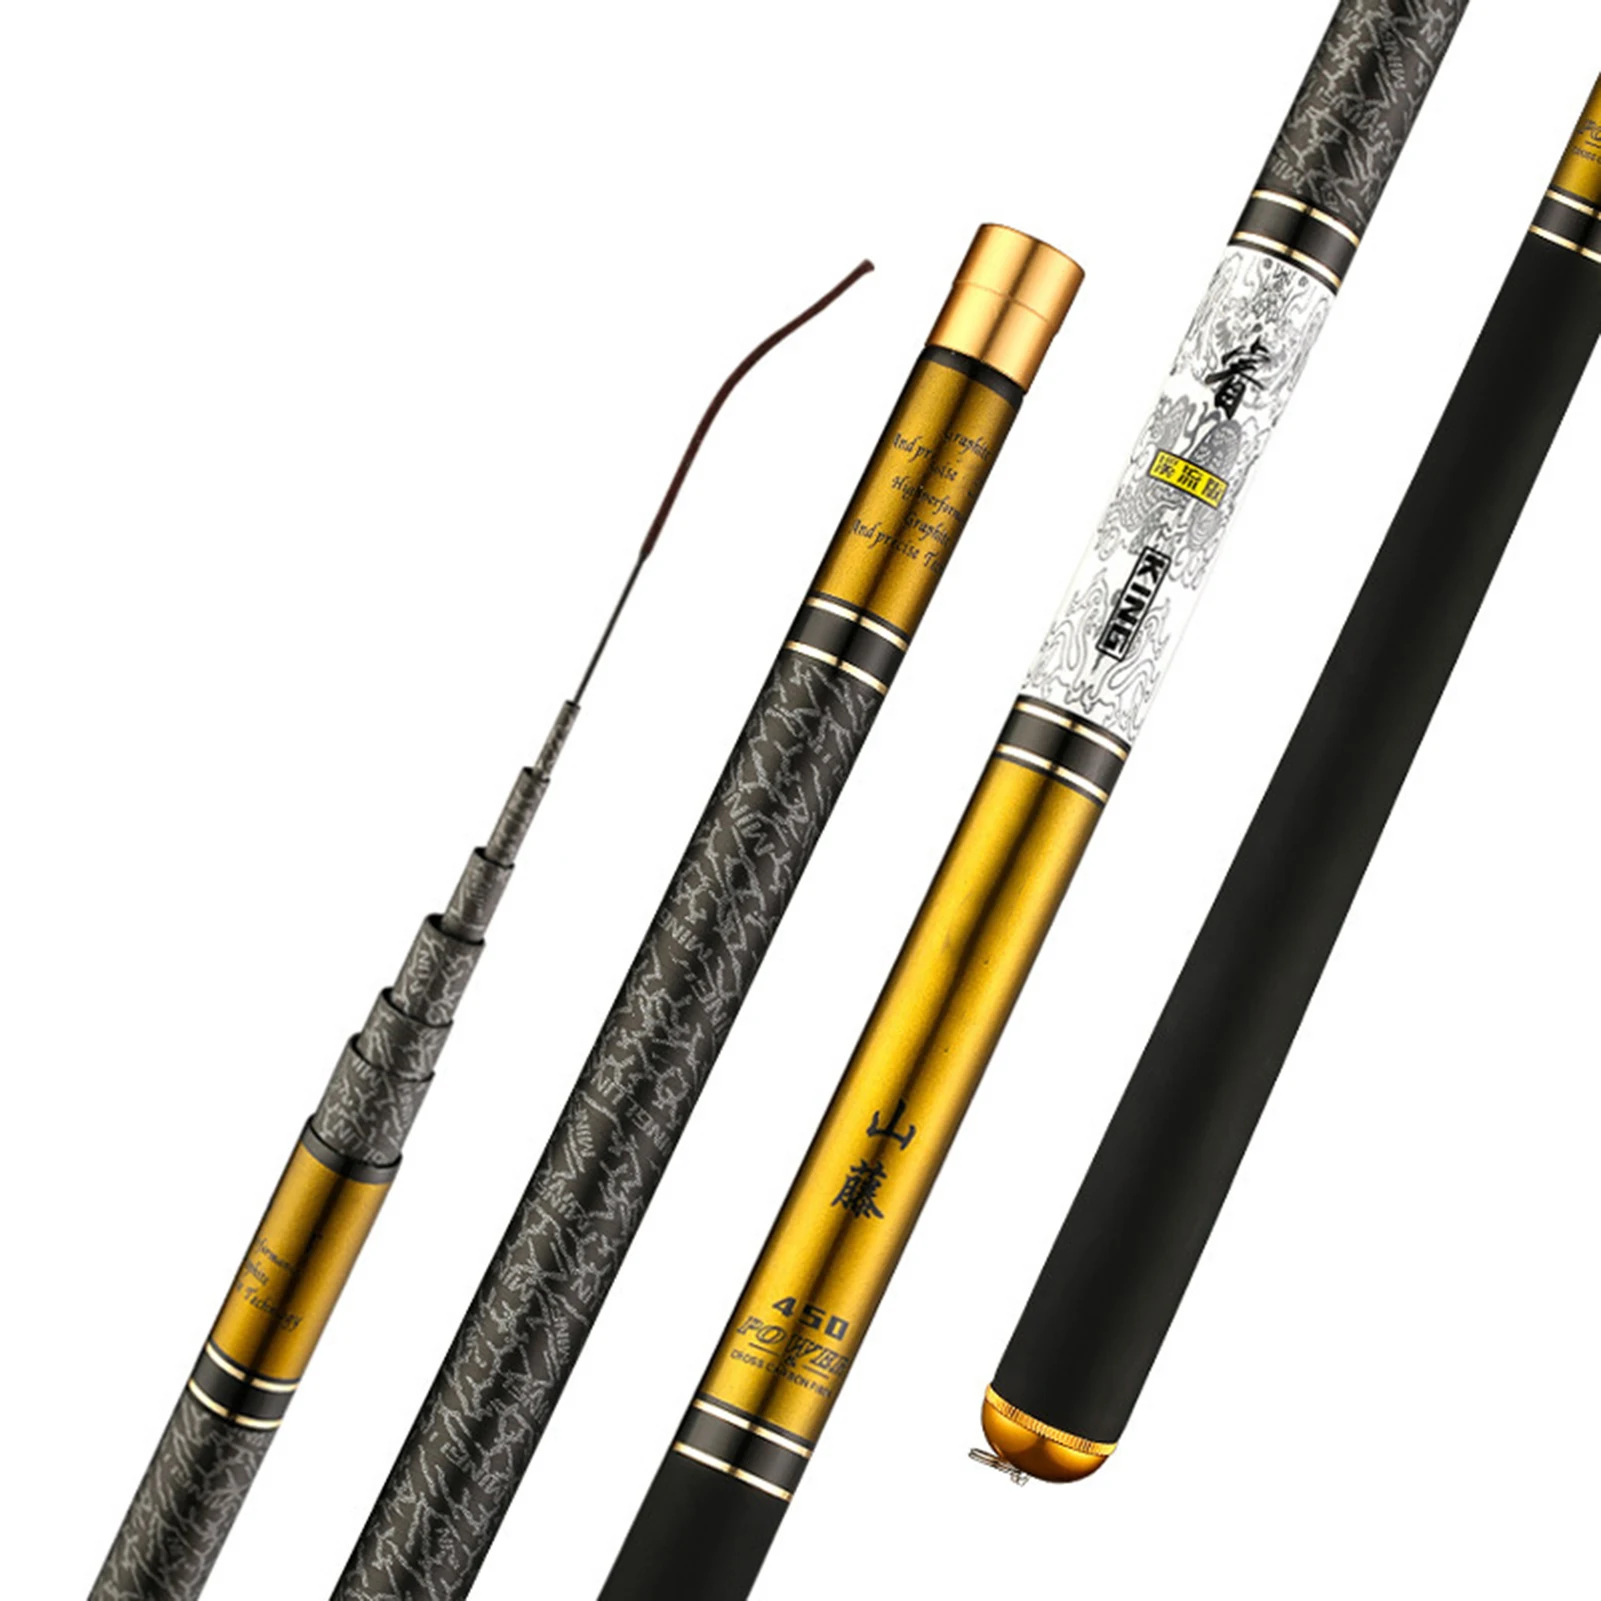 Enlarge Telescopic Fishing Pole Japanese High Carbon Fishing Rod 3.6/4.5/5.4/6.3/7.2m Short Handheld 28 Tonality Travel Sea Pole